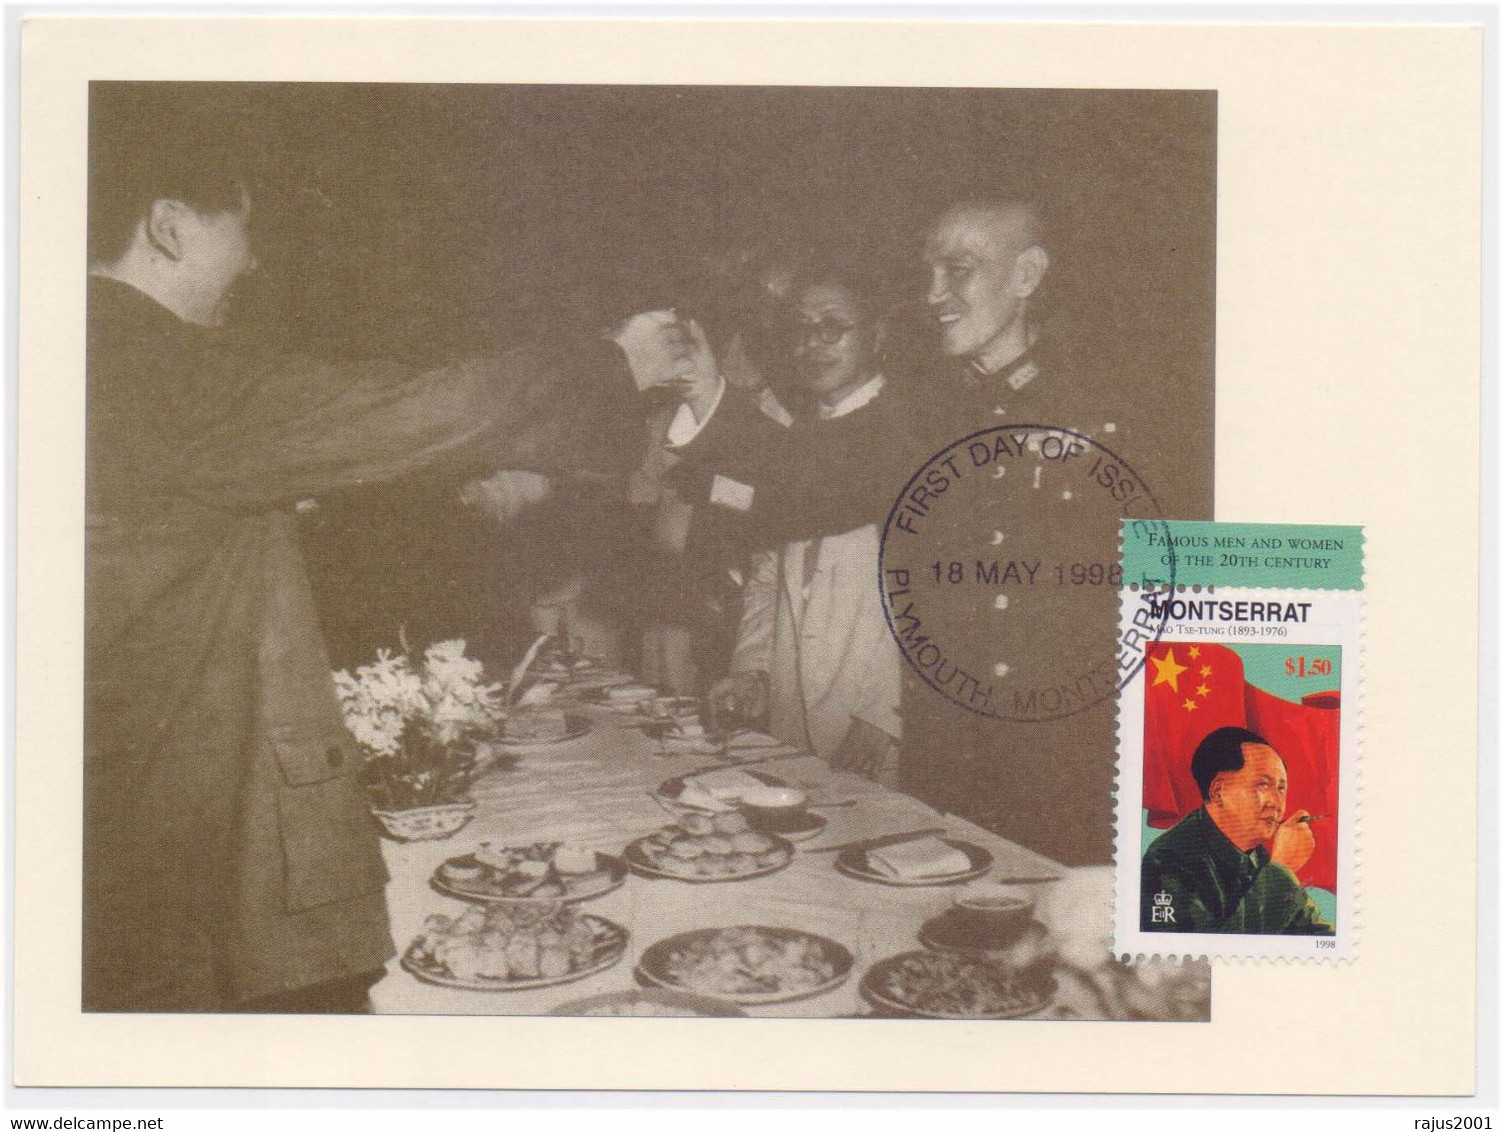 Mao Zedong, Mao Tse-Tung Leads China's Revolution, Chinese Revolutionary Communist Leader, History Famous Men, Max Card - Mao Tse-Tung